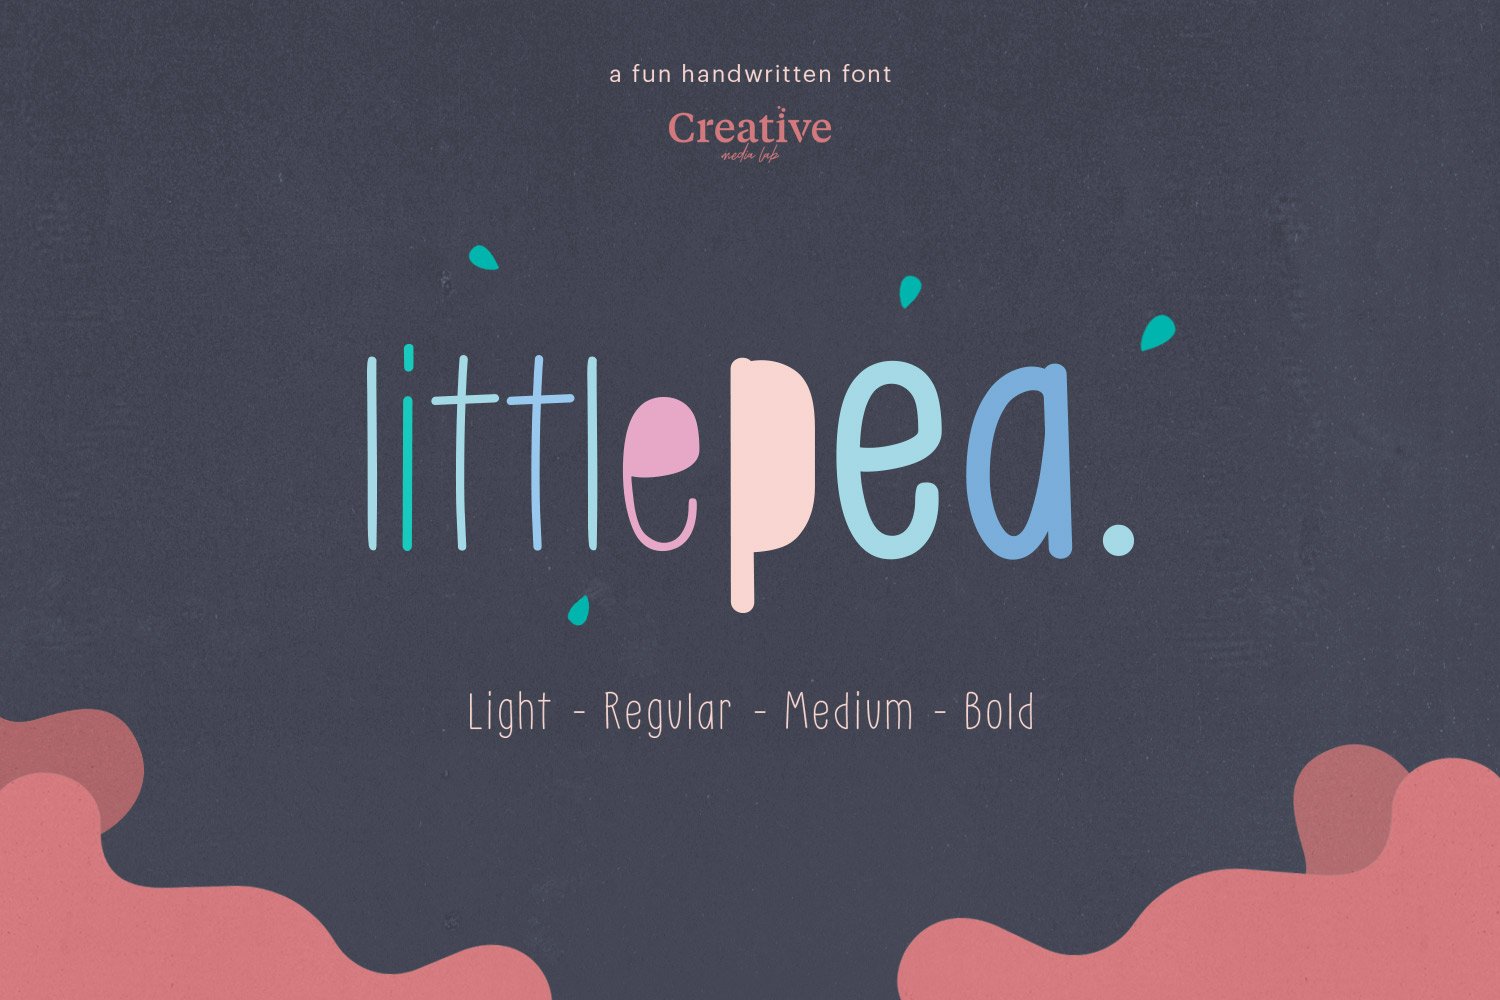 Little Pea - Handwritten Font cover image.